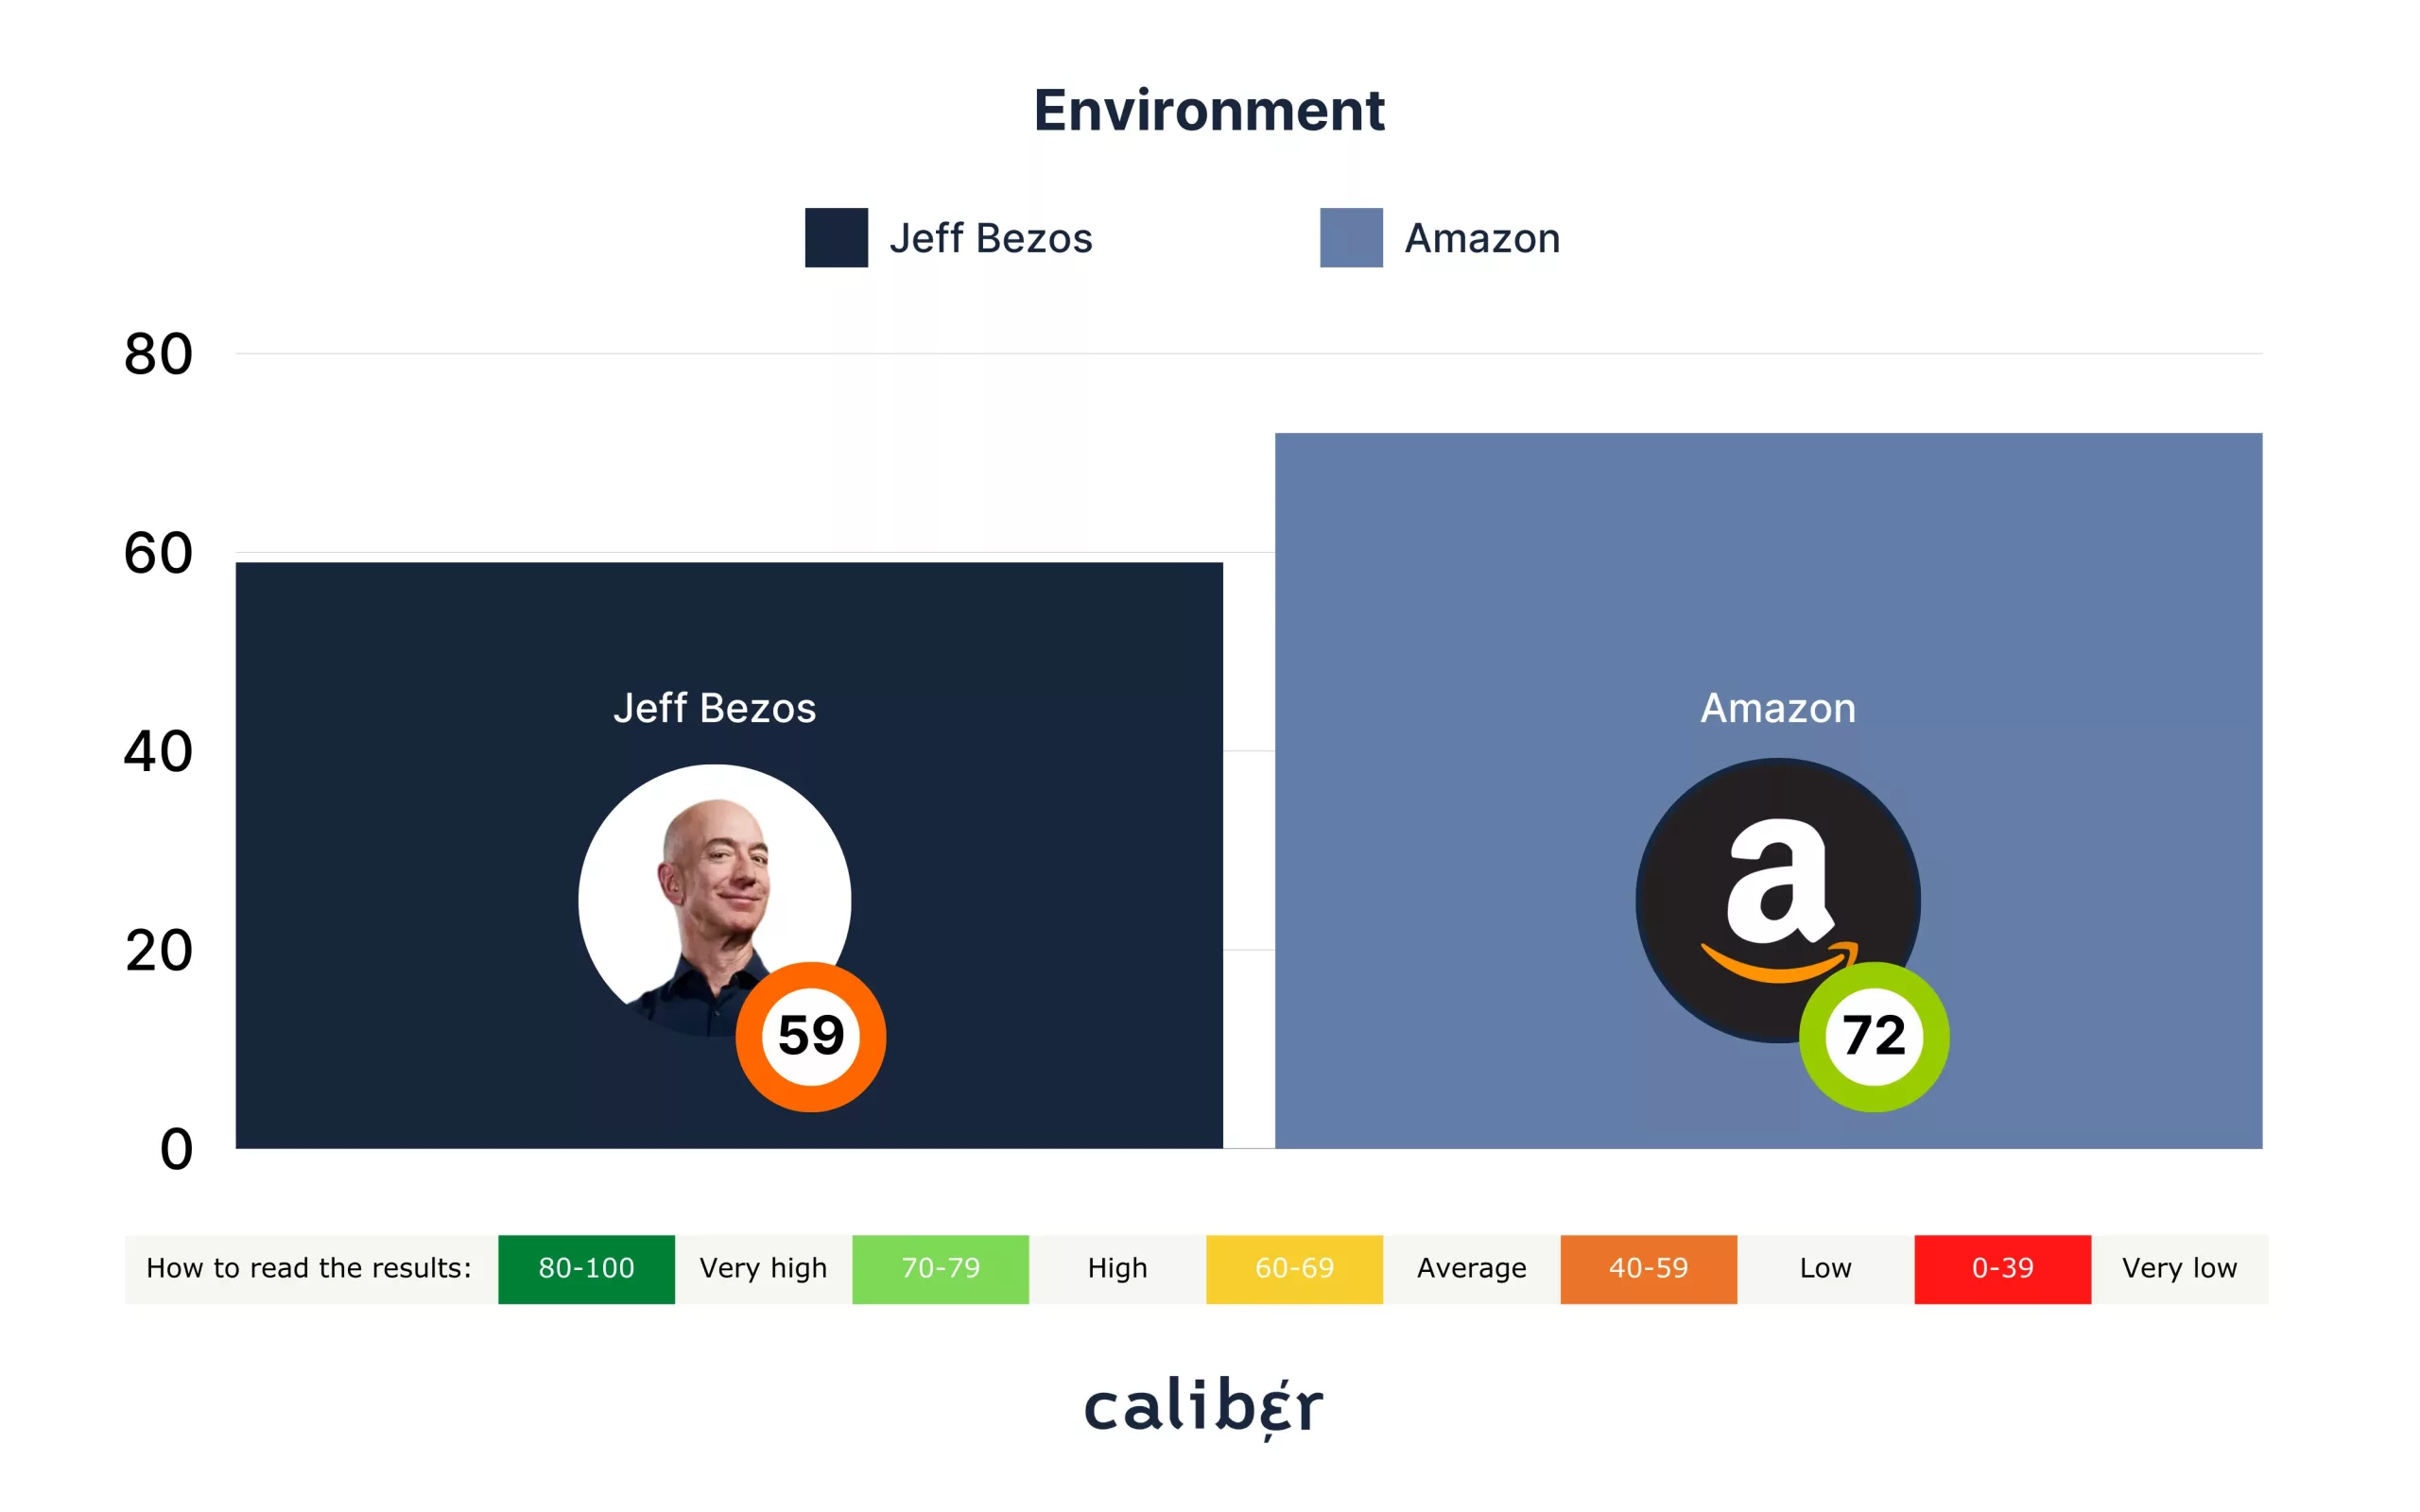 Jeff Bezos Environment Score